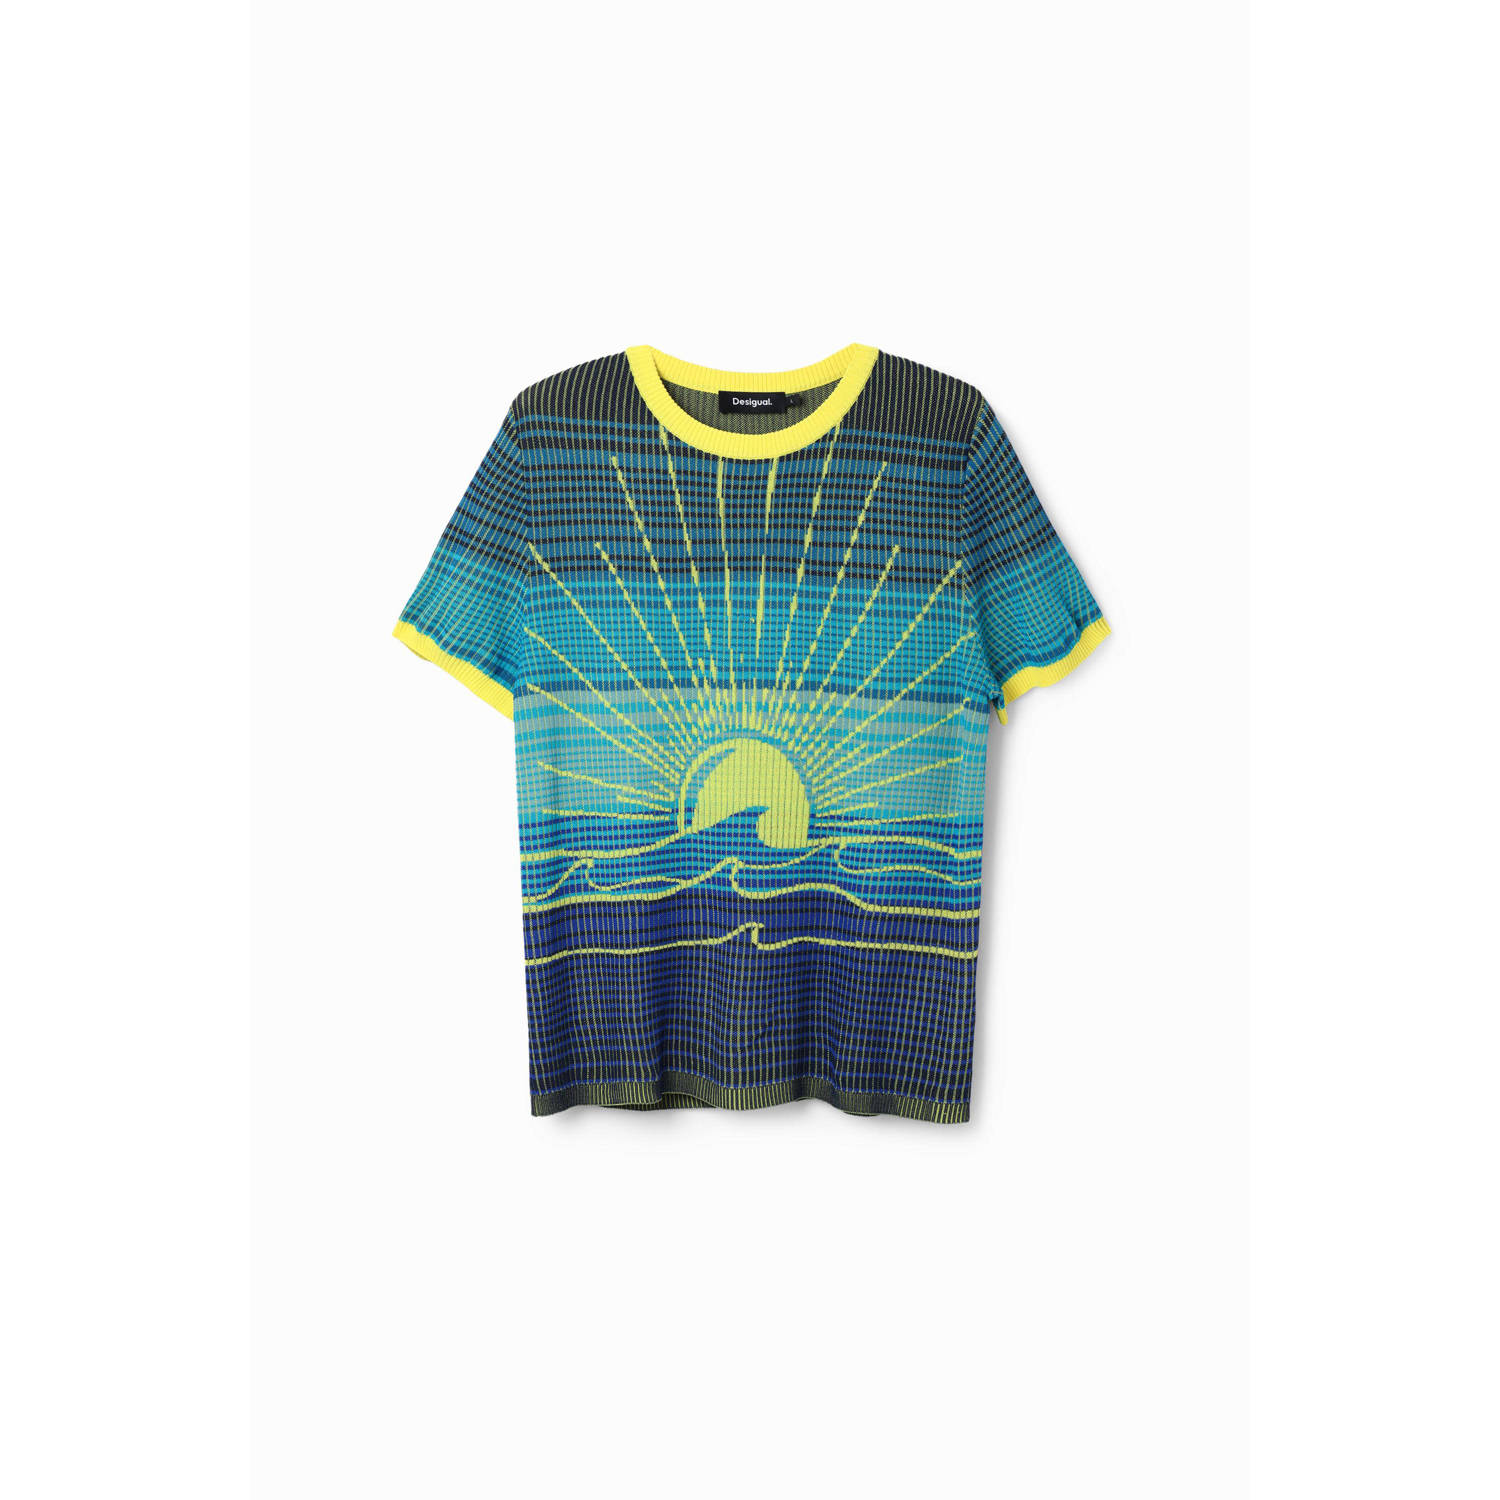 Desigual T-shirt met ingebreid patroon blauw geel